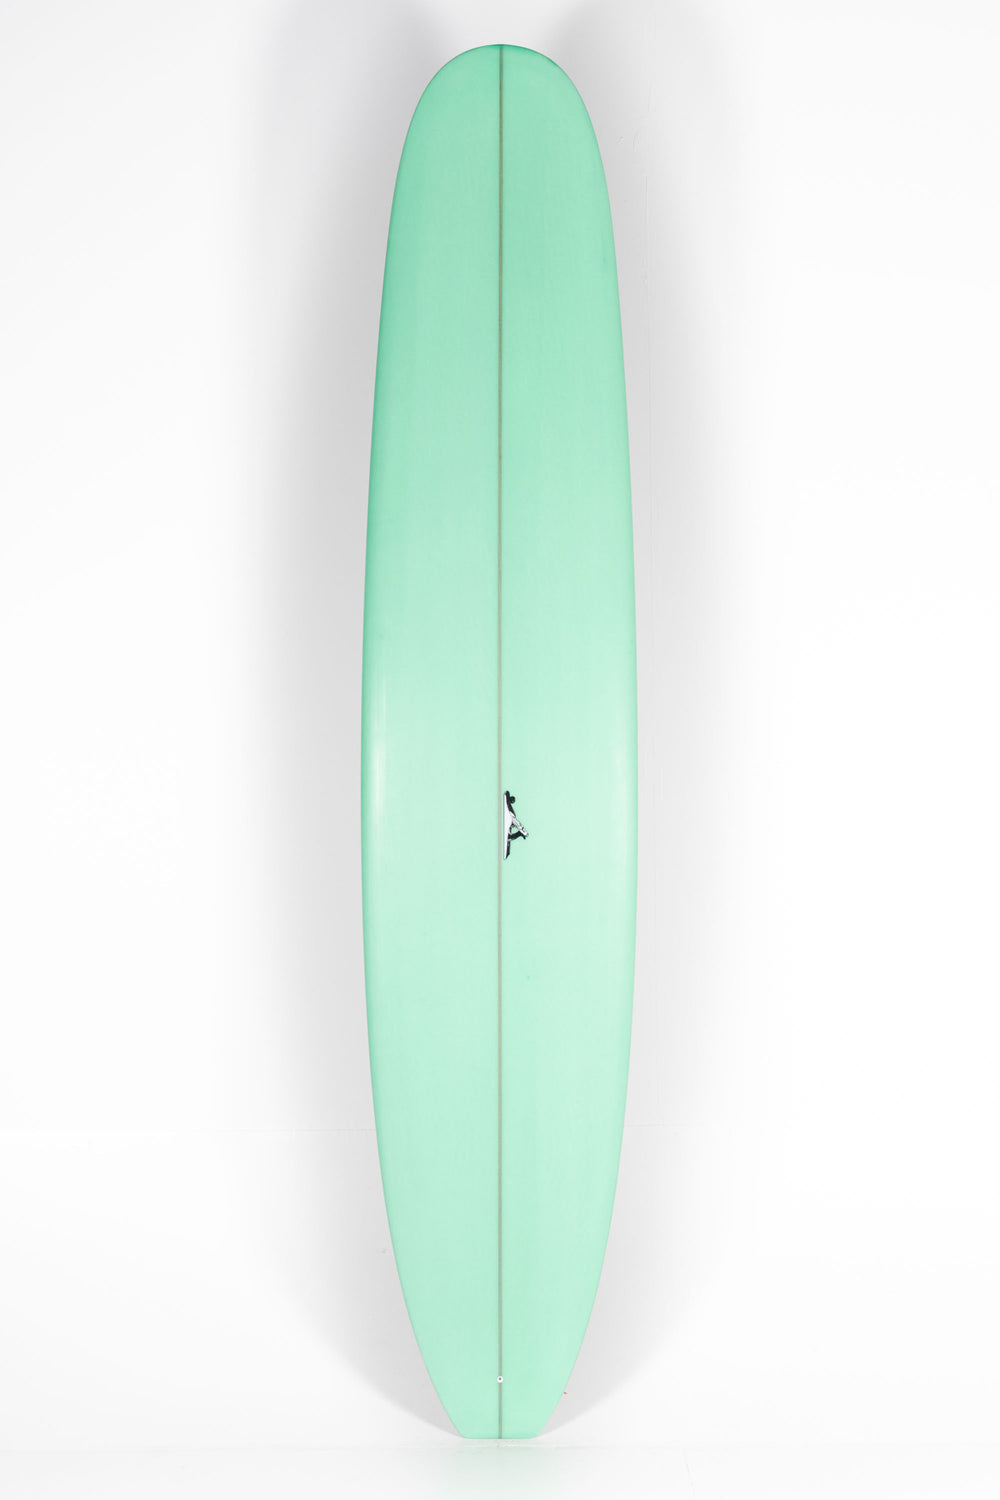 Pukas Surf Shop - Thomas Surfboards - KEEPER - 9'7